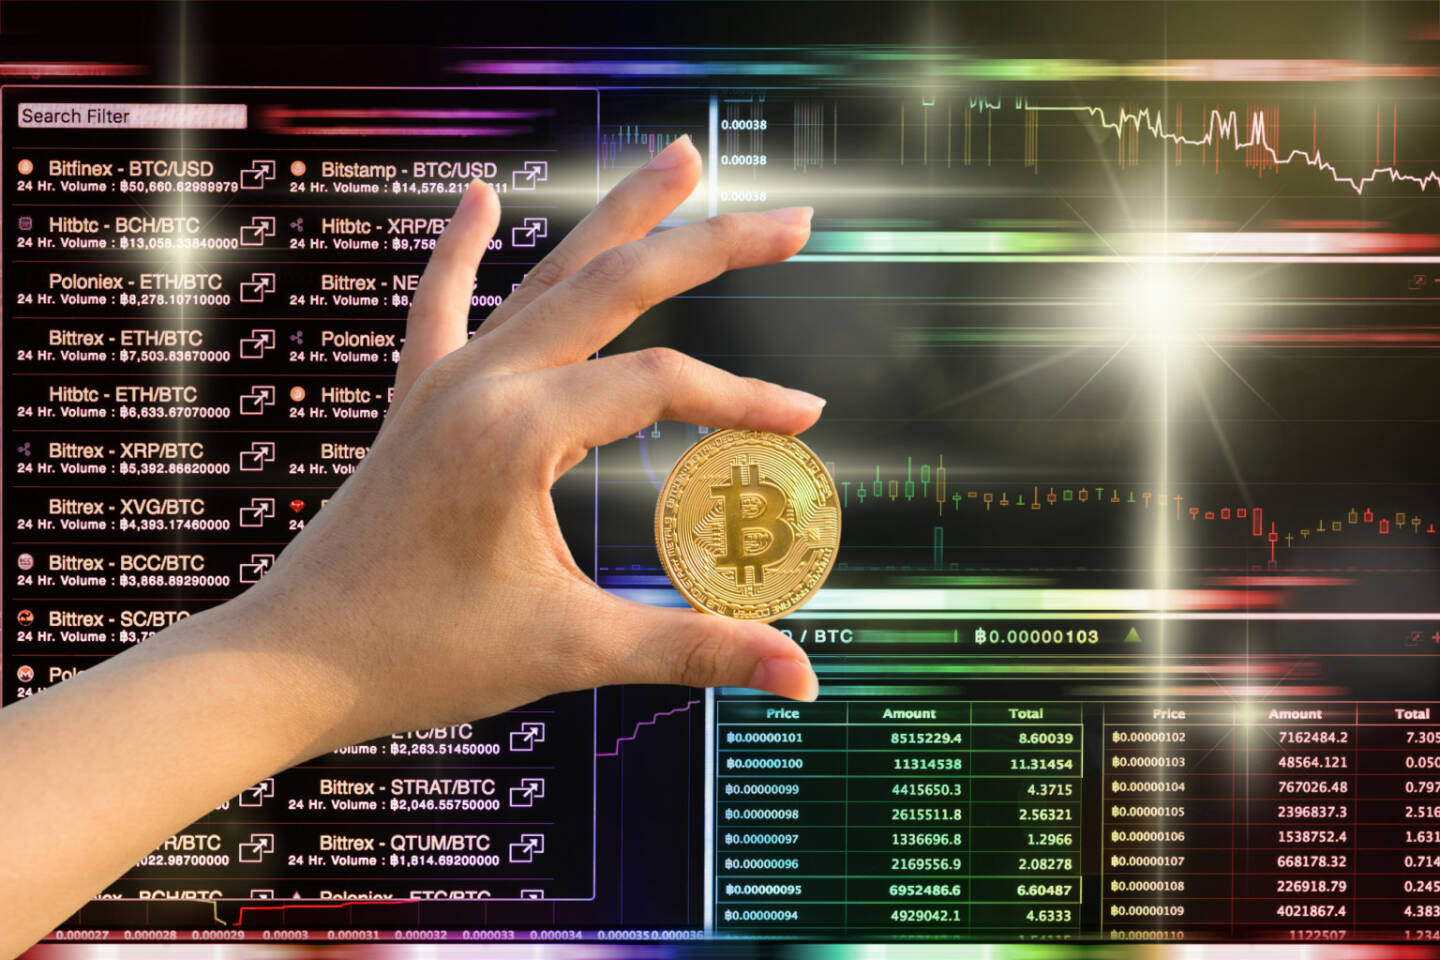 Cryptocurrency, Bitcoin, Block chain, trading - https://de.depositphotos.com/195417806/stock-photo-closeup-hand-holding-bitcoin-cryptocurrency.html